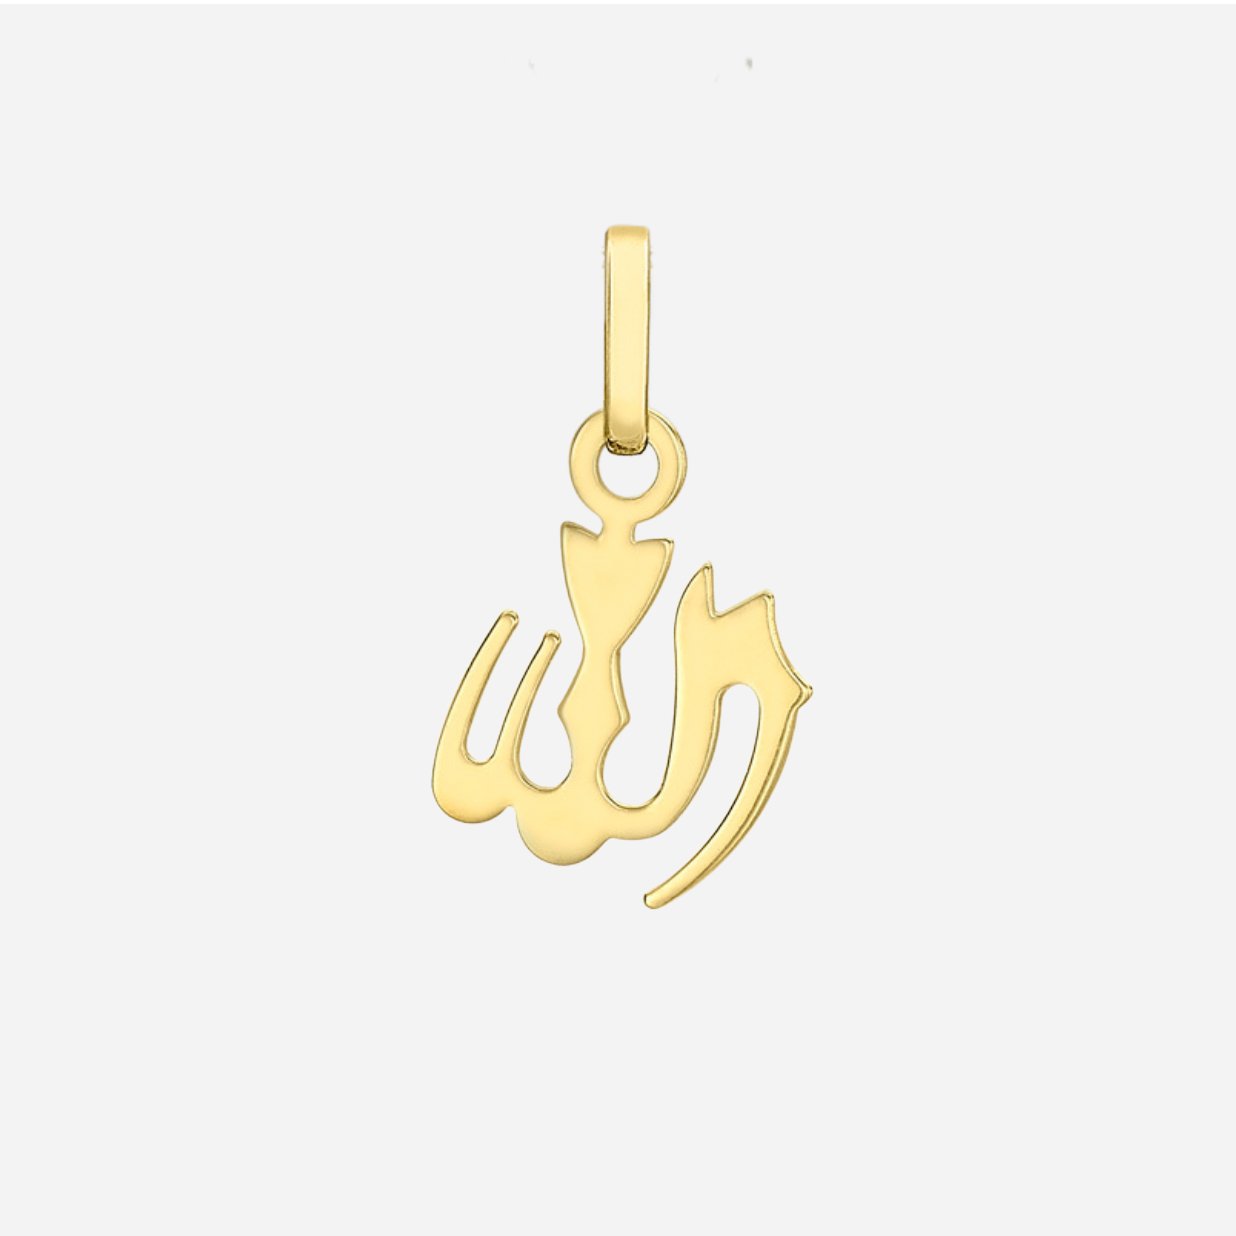 Berlock 9k guld – Allah symbol 20x10mm